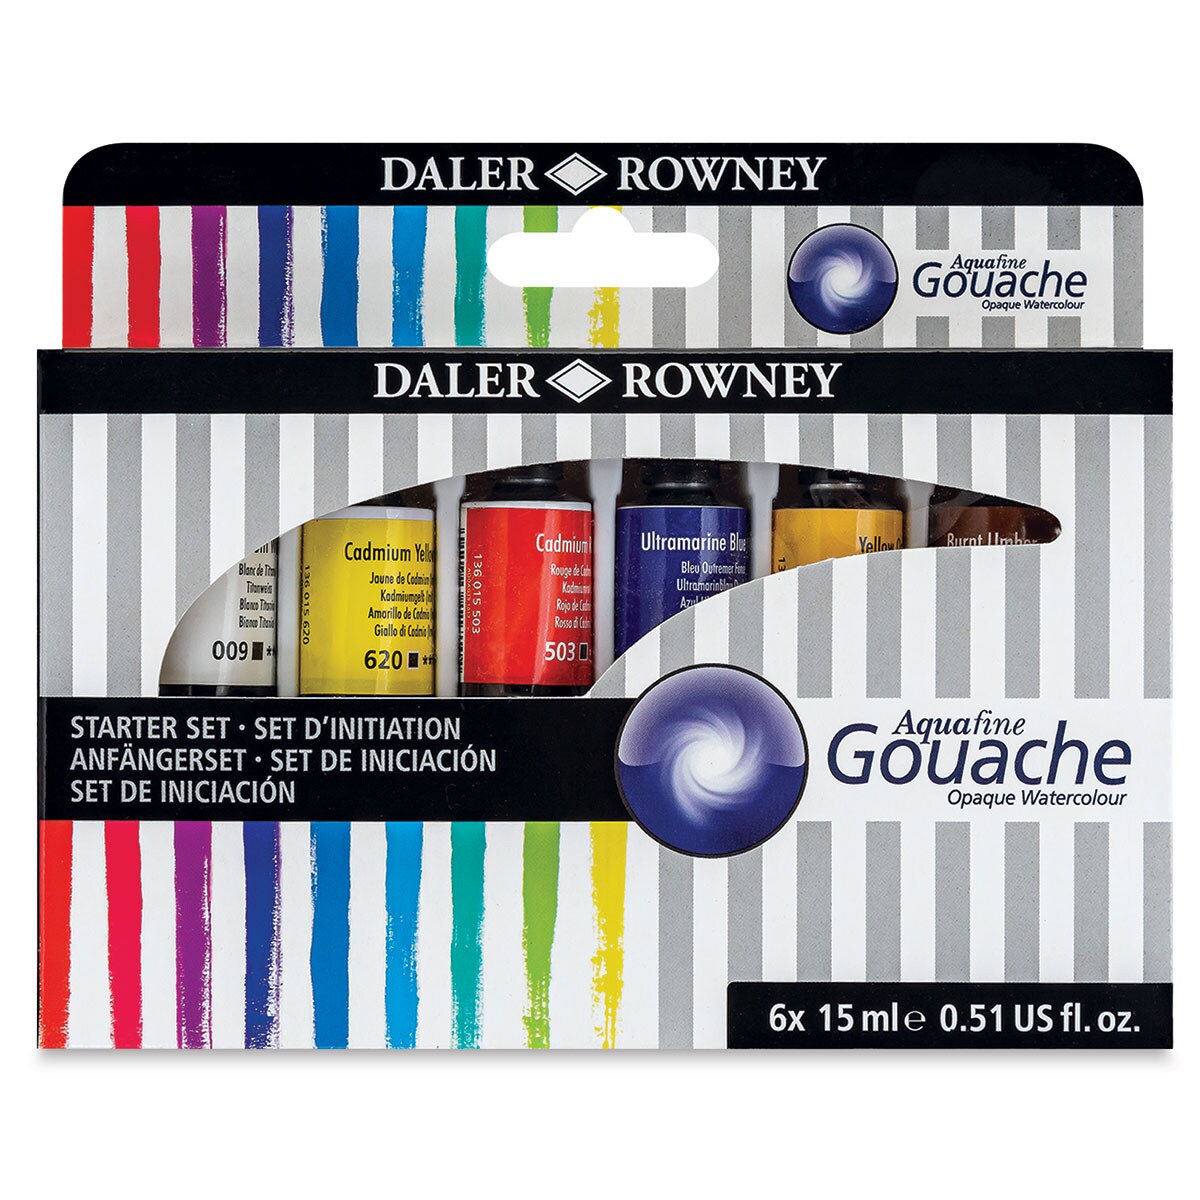 Daler-Rowney Aquafine Gouache - Set of 6, Assorted Colors, 15 ml, Tube